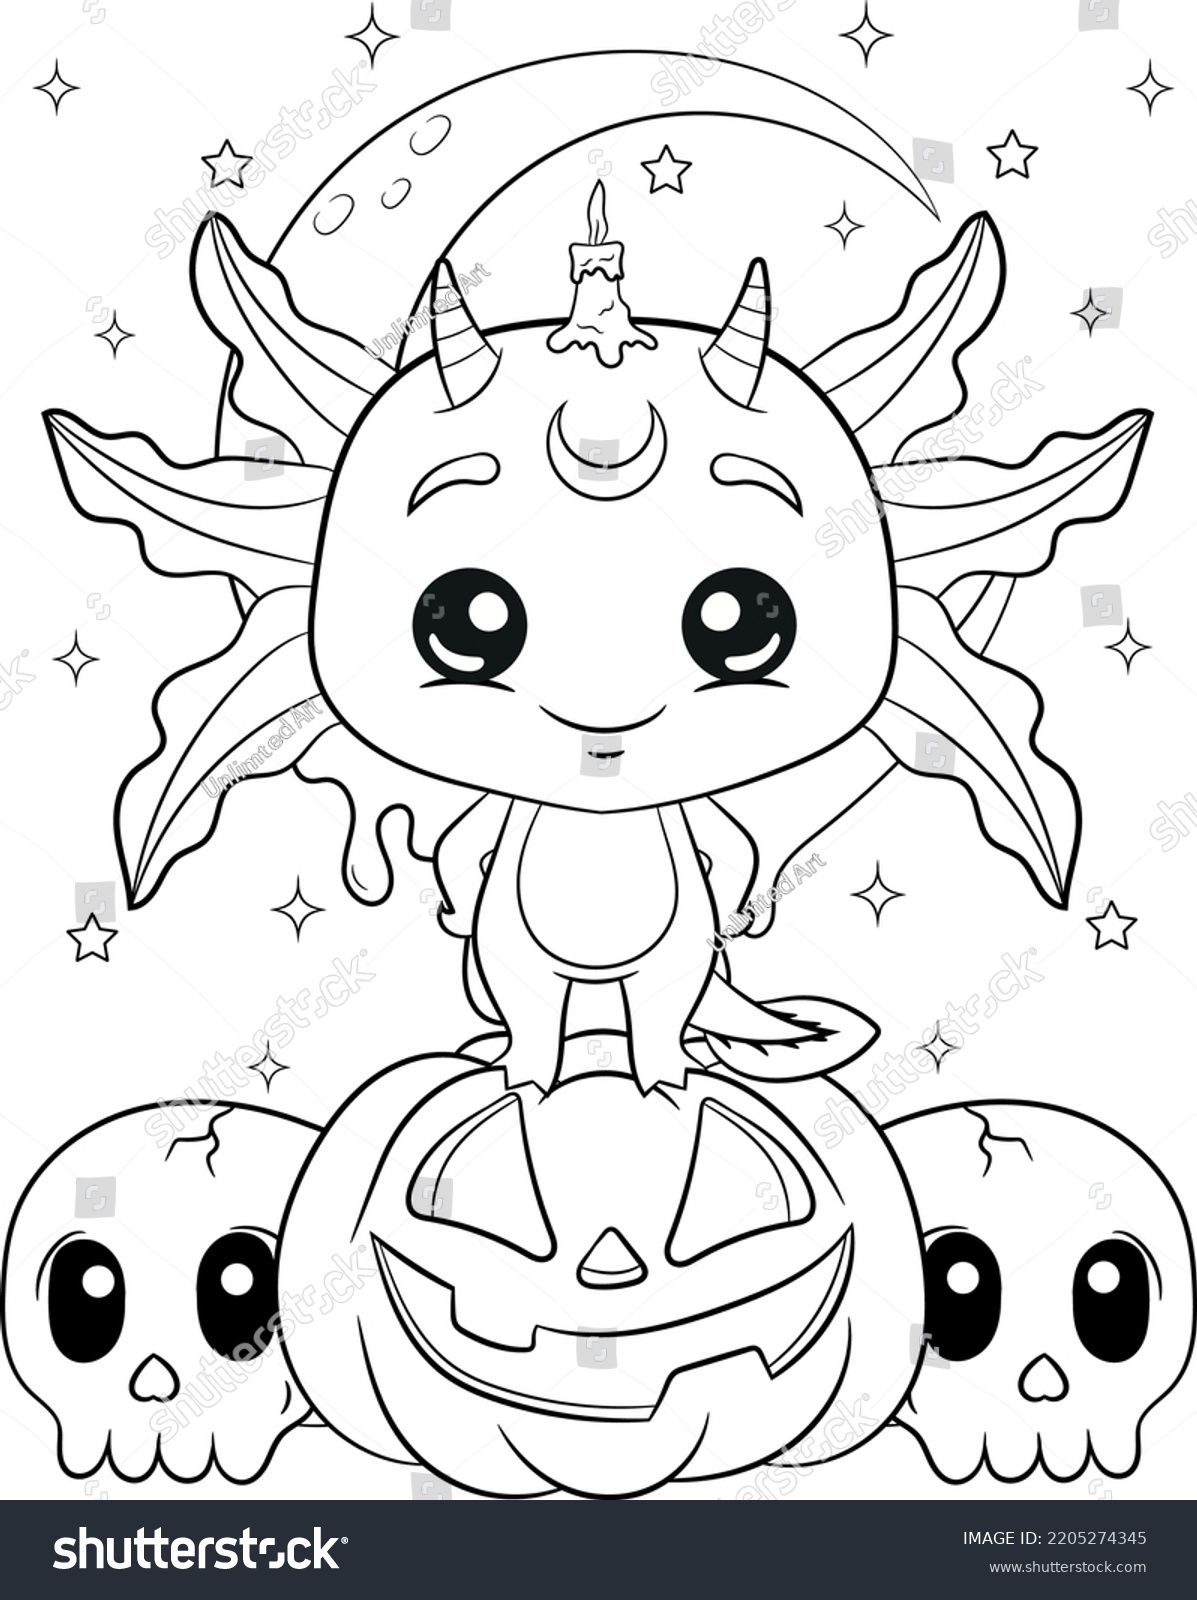 Cute creepy kawaii halloween axolotl coloring stock vector royalty free